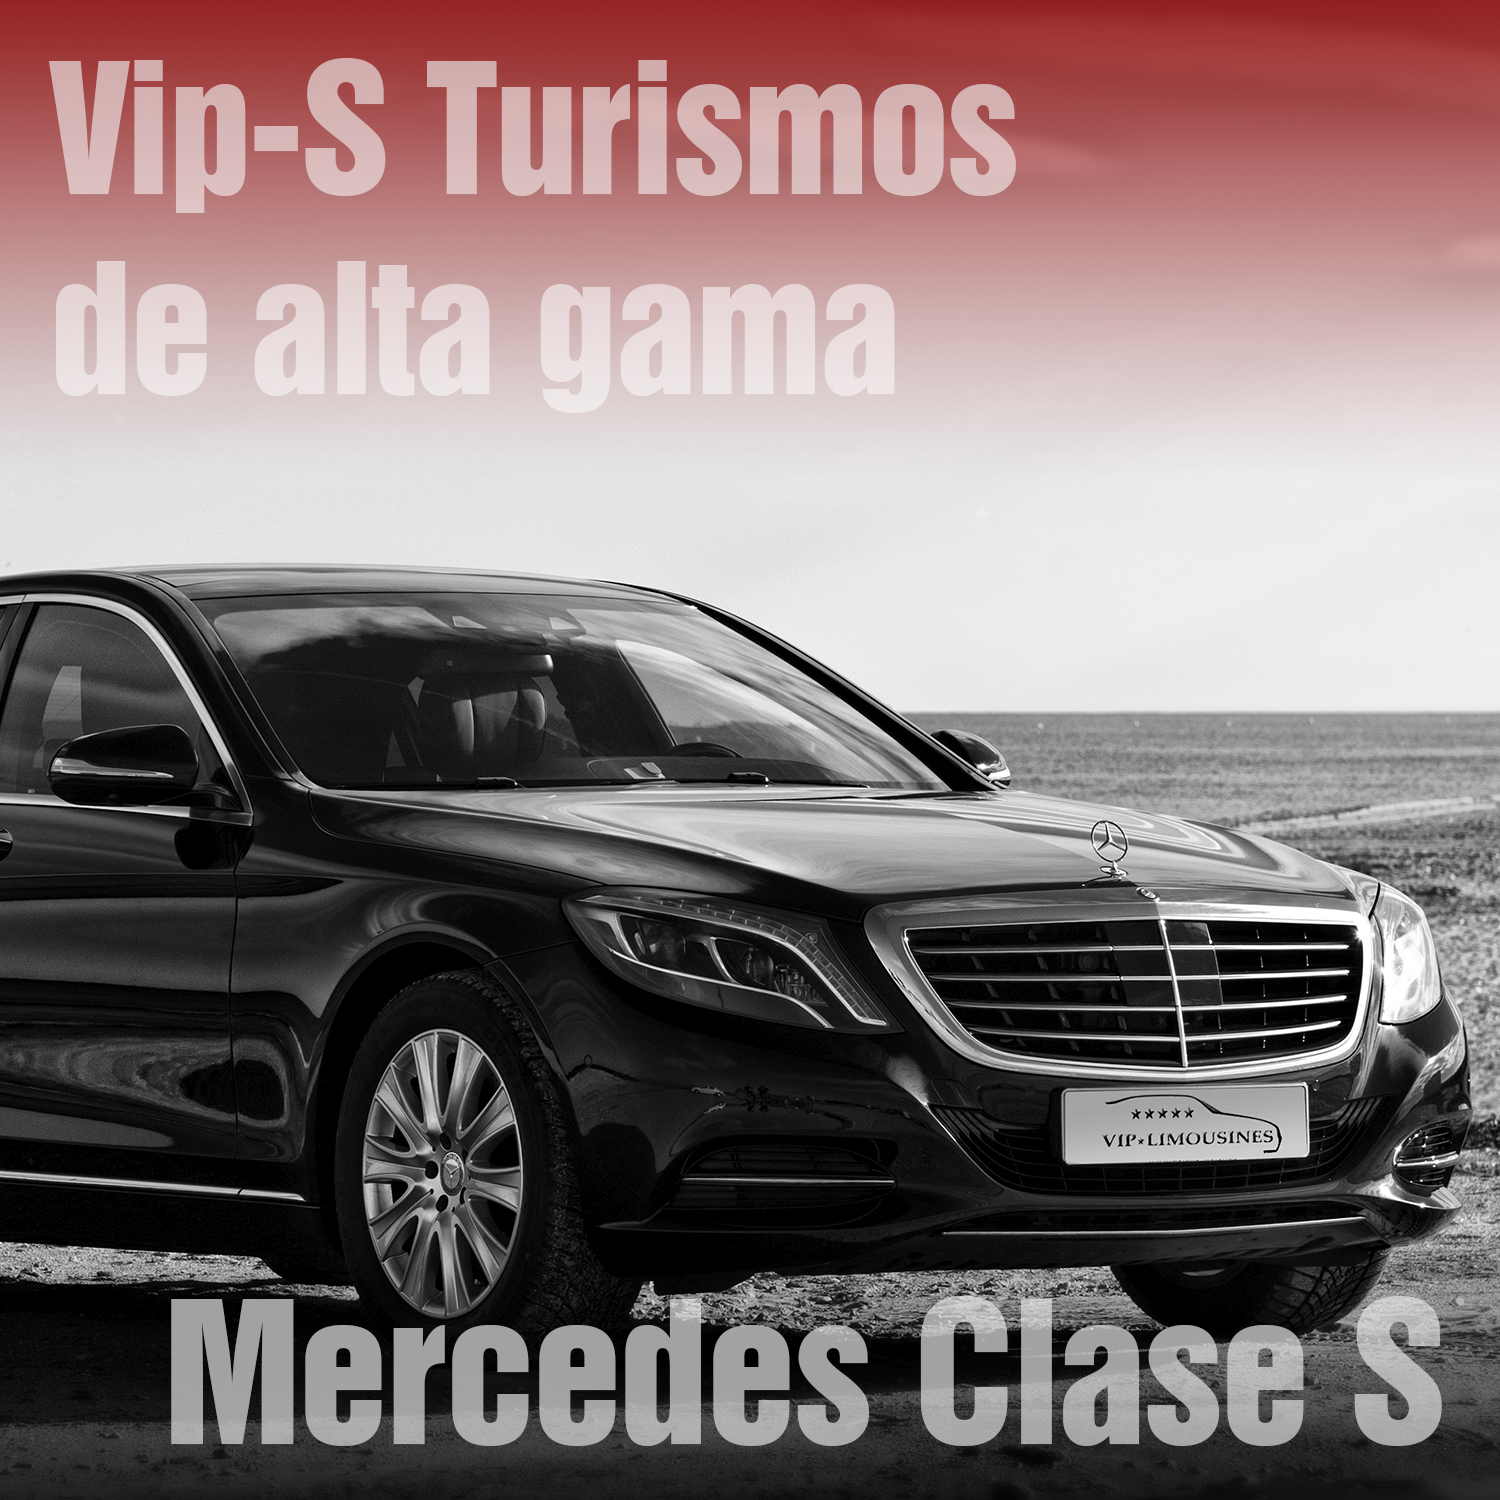 Mercedes Clase S VIP